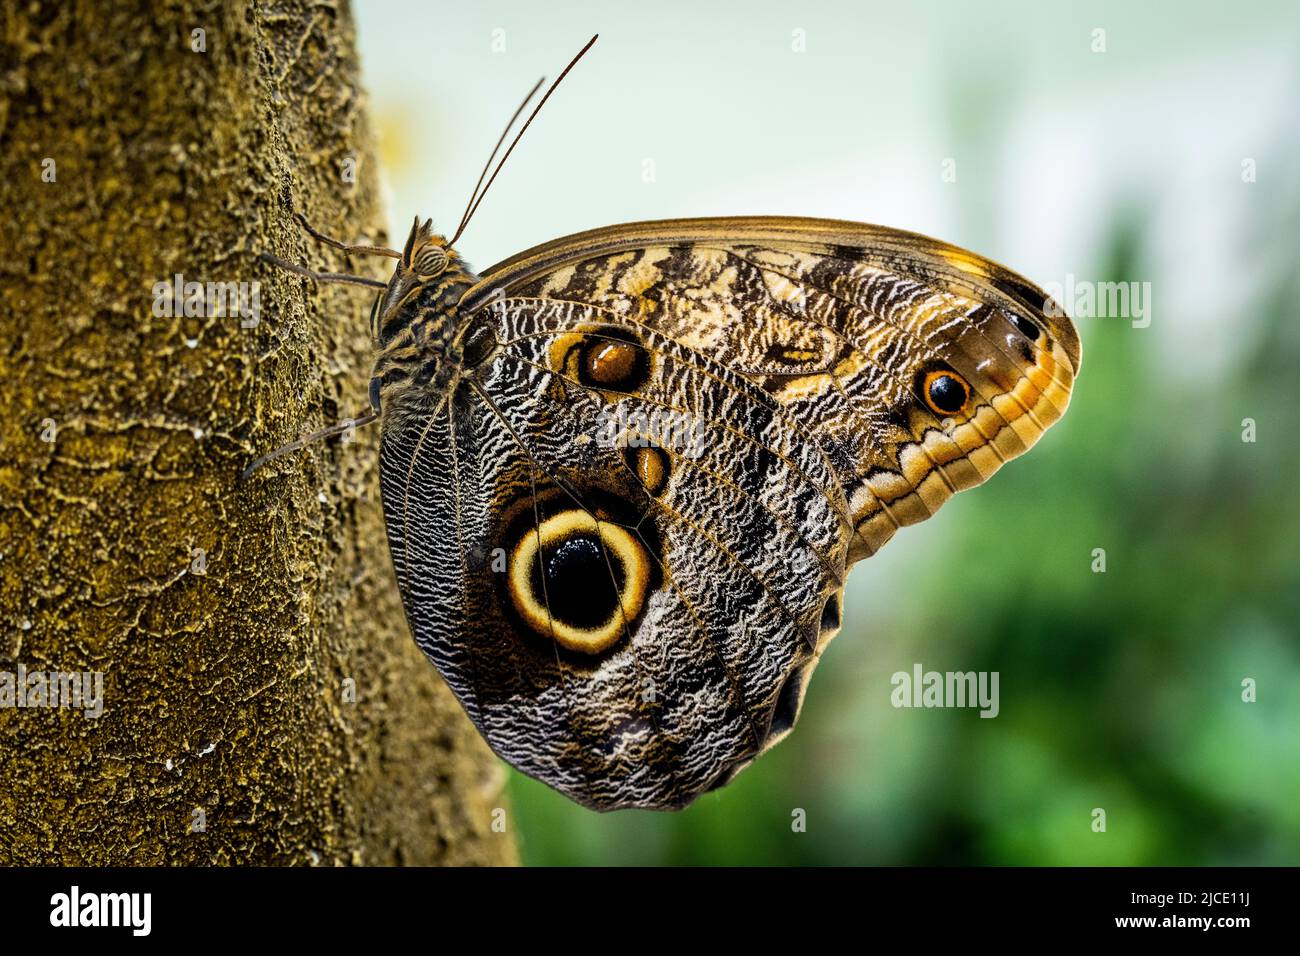 Brazilian Owl Butterfly flying freely in a vivarium. Stock Photo